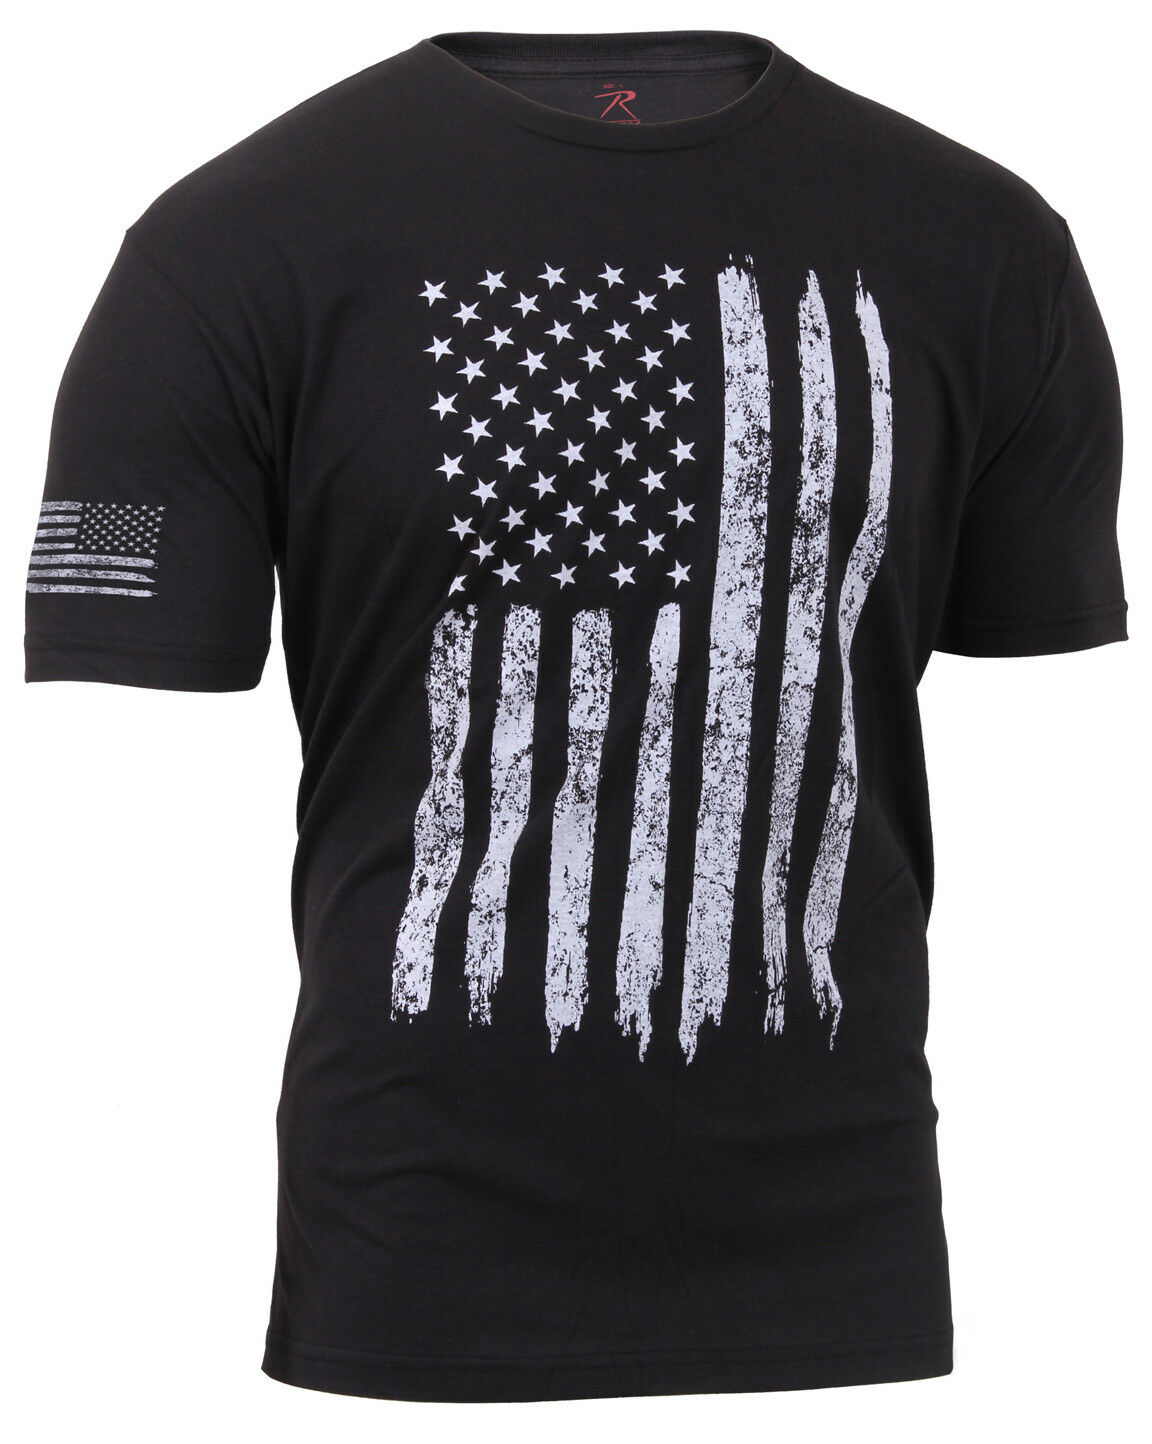 Rothco Distressed US Flag Athletic Fit T-Shirt - Black